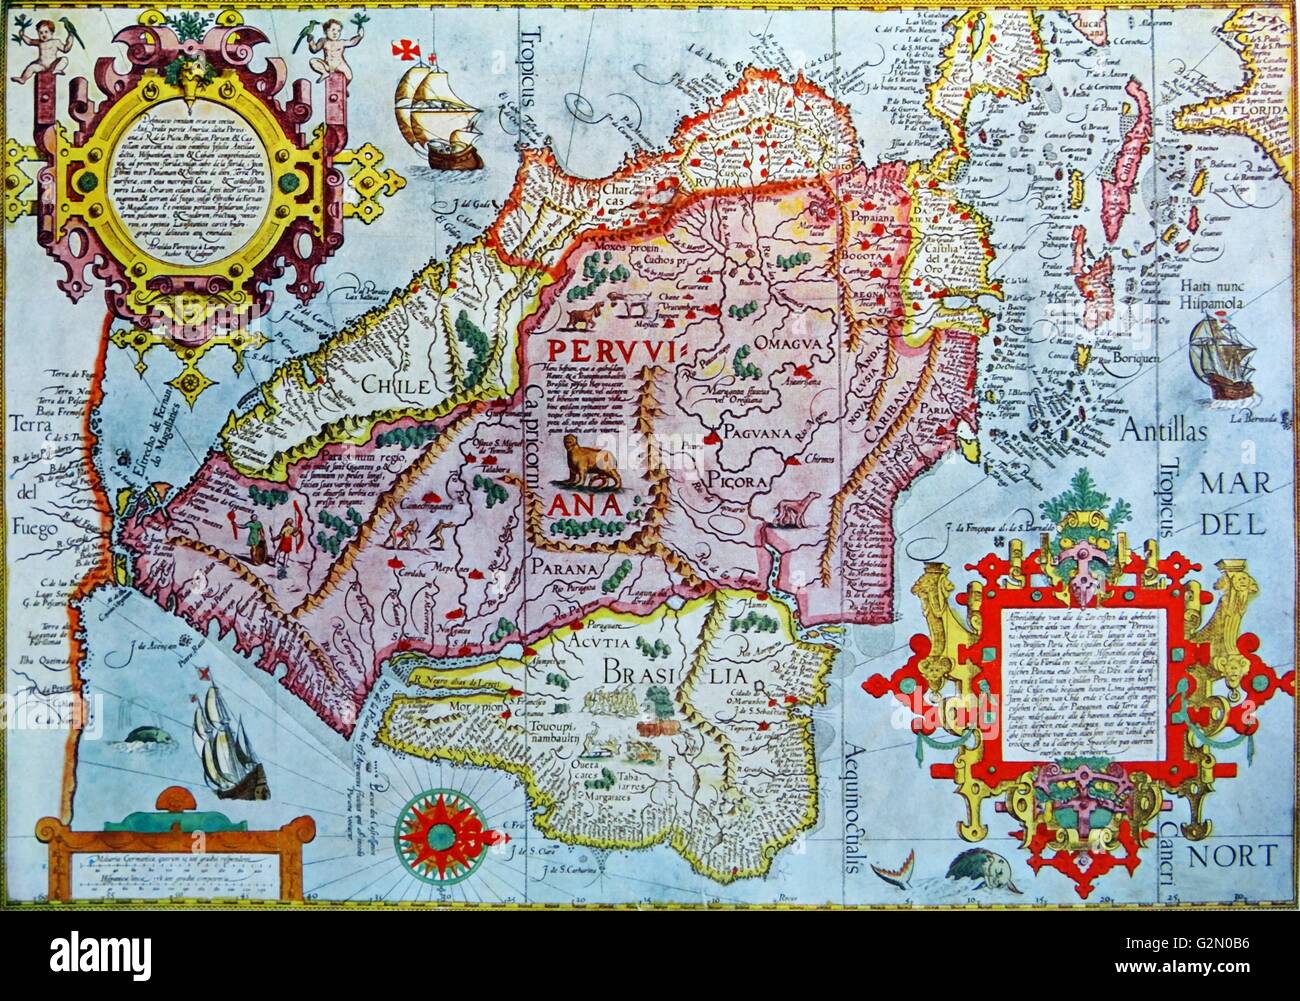 Mappa di Perù arnoldus florentius 1599 Foto Stock